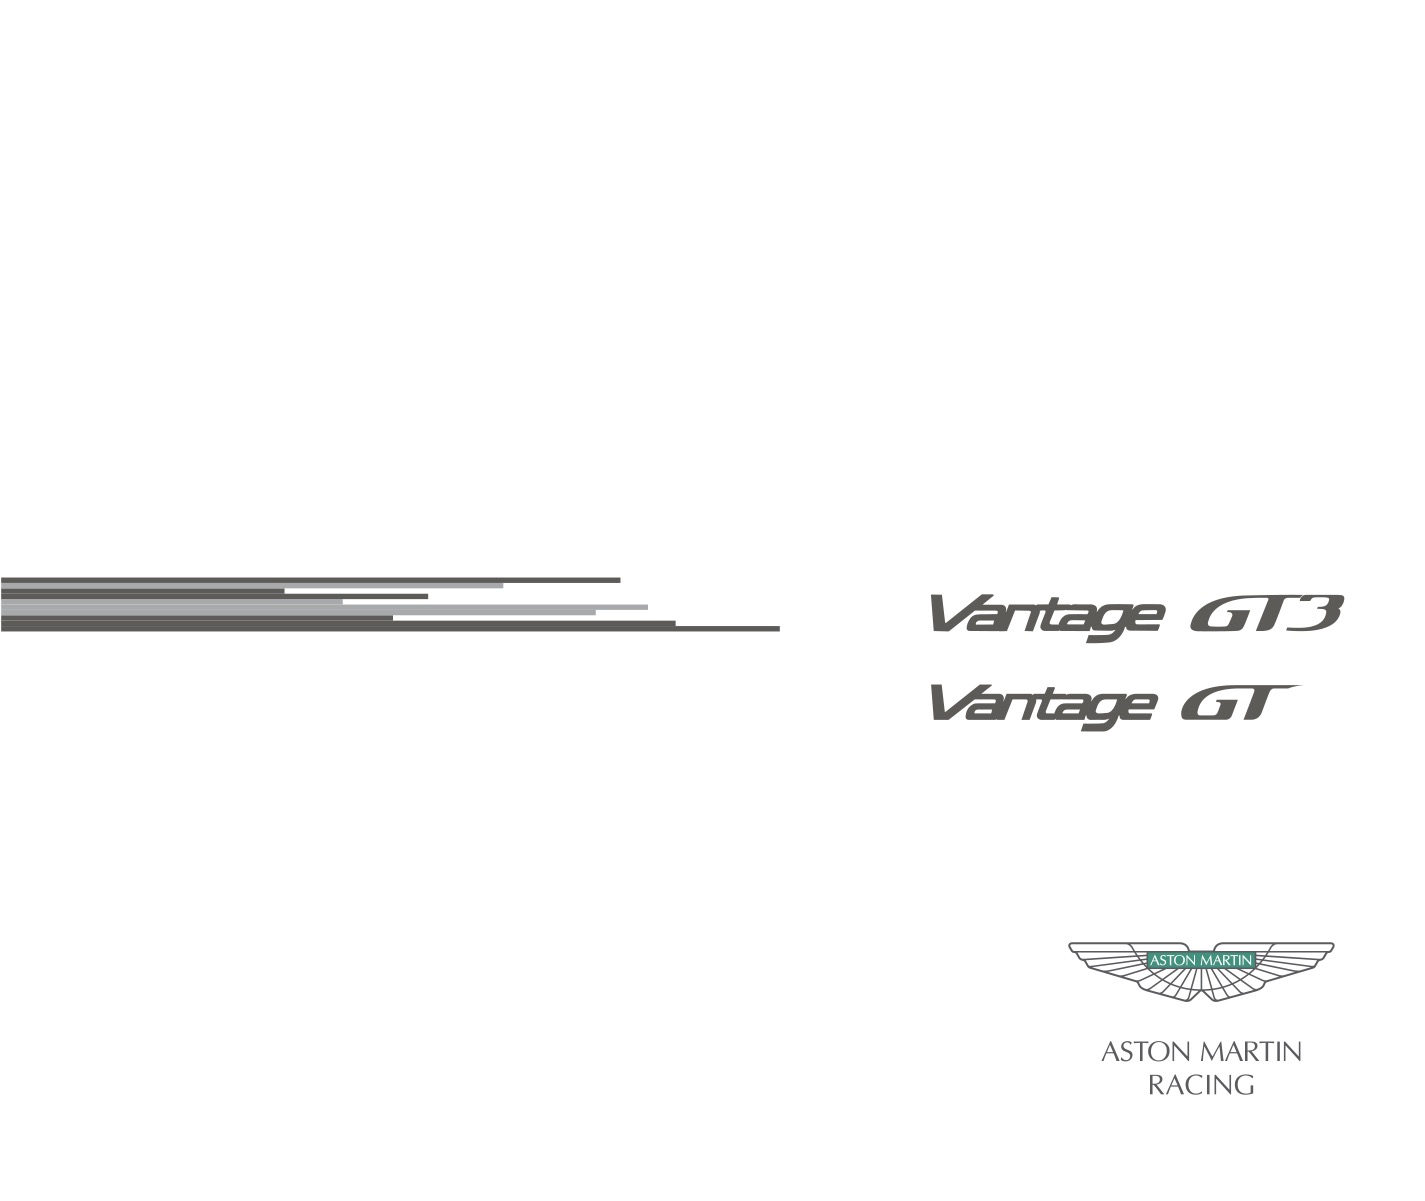 Aston Martin Vantage GT3 Brochure